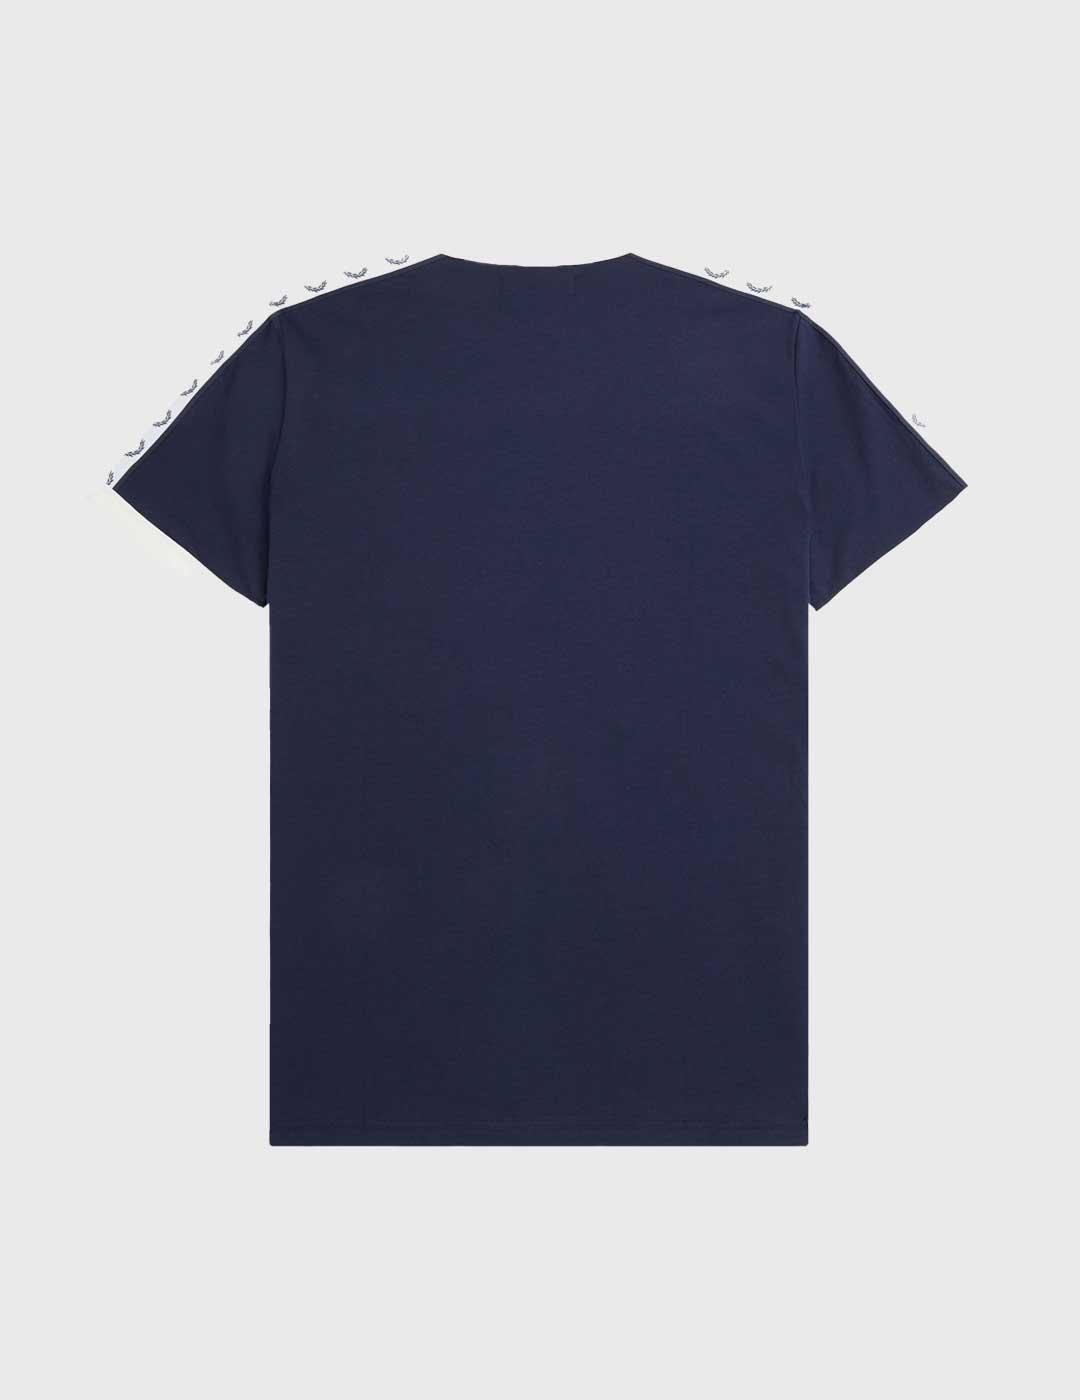 Fred Perry Taped Ringer Camiseta azul marino para hombre